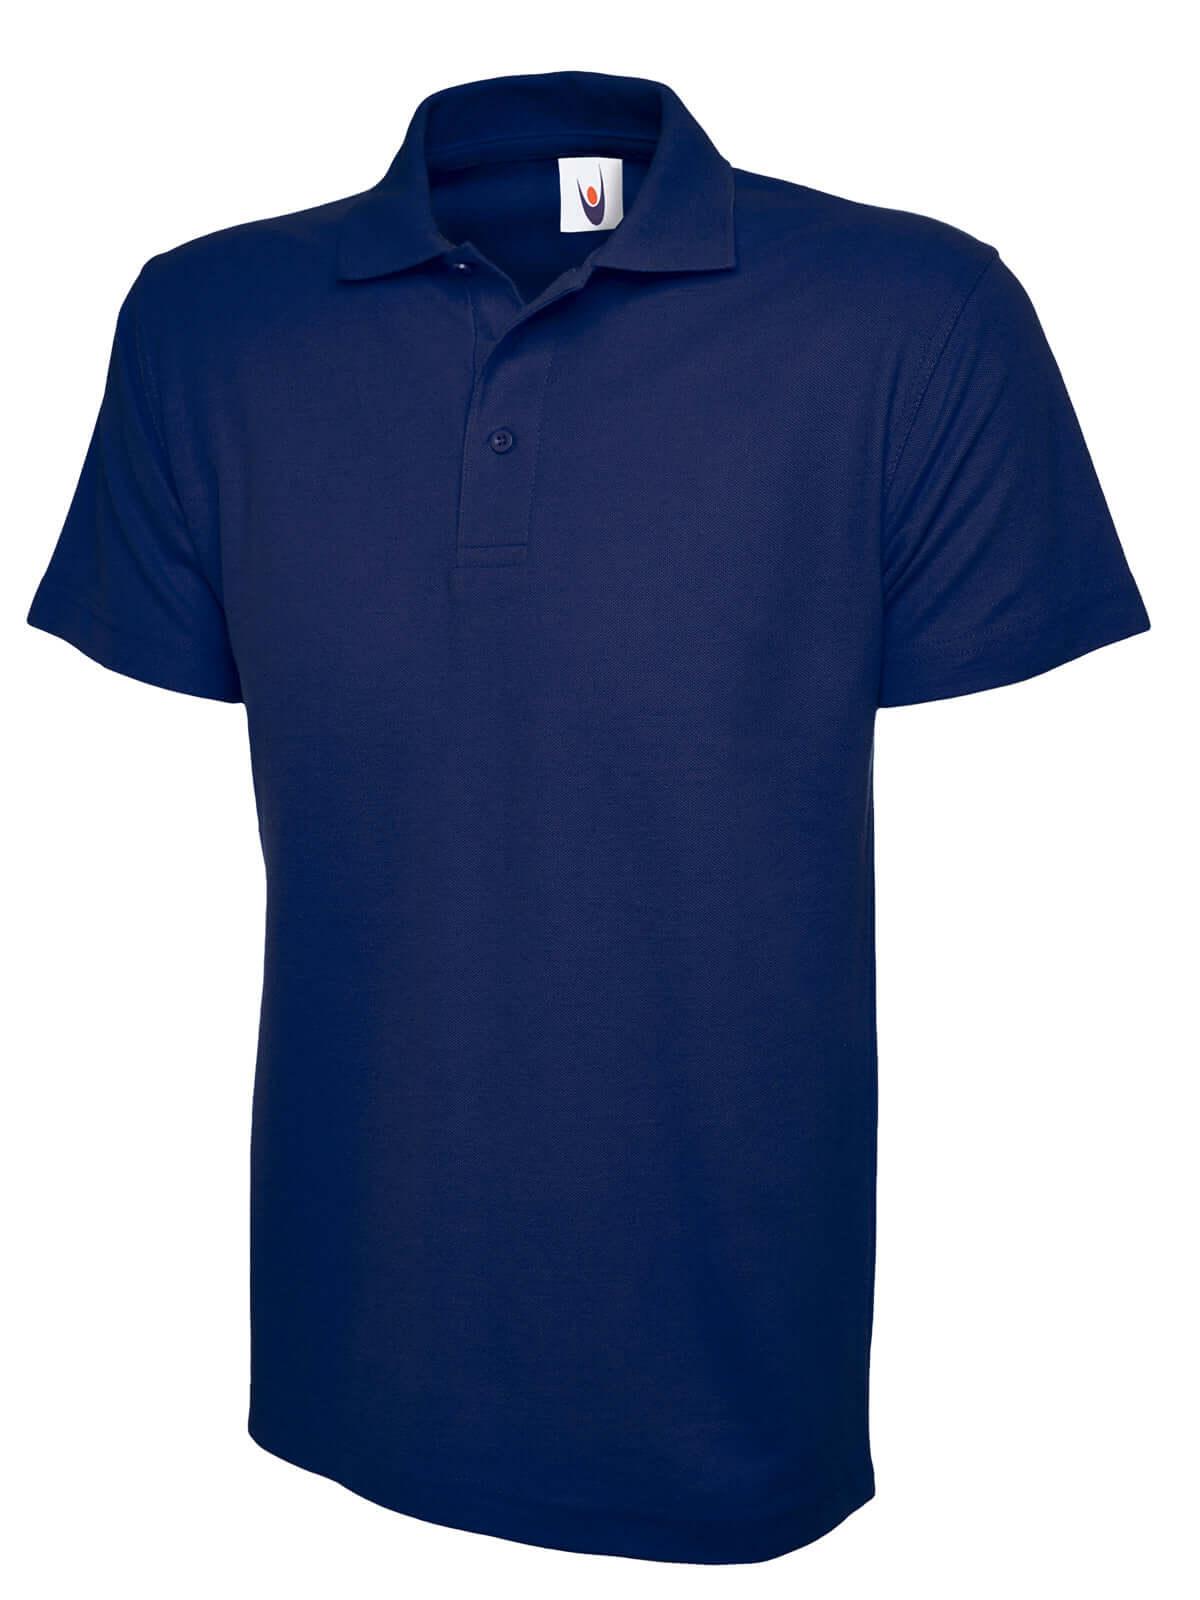 Pegasus Uniform Classic Unisex Polo Shirt - Navy Blue